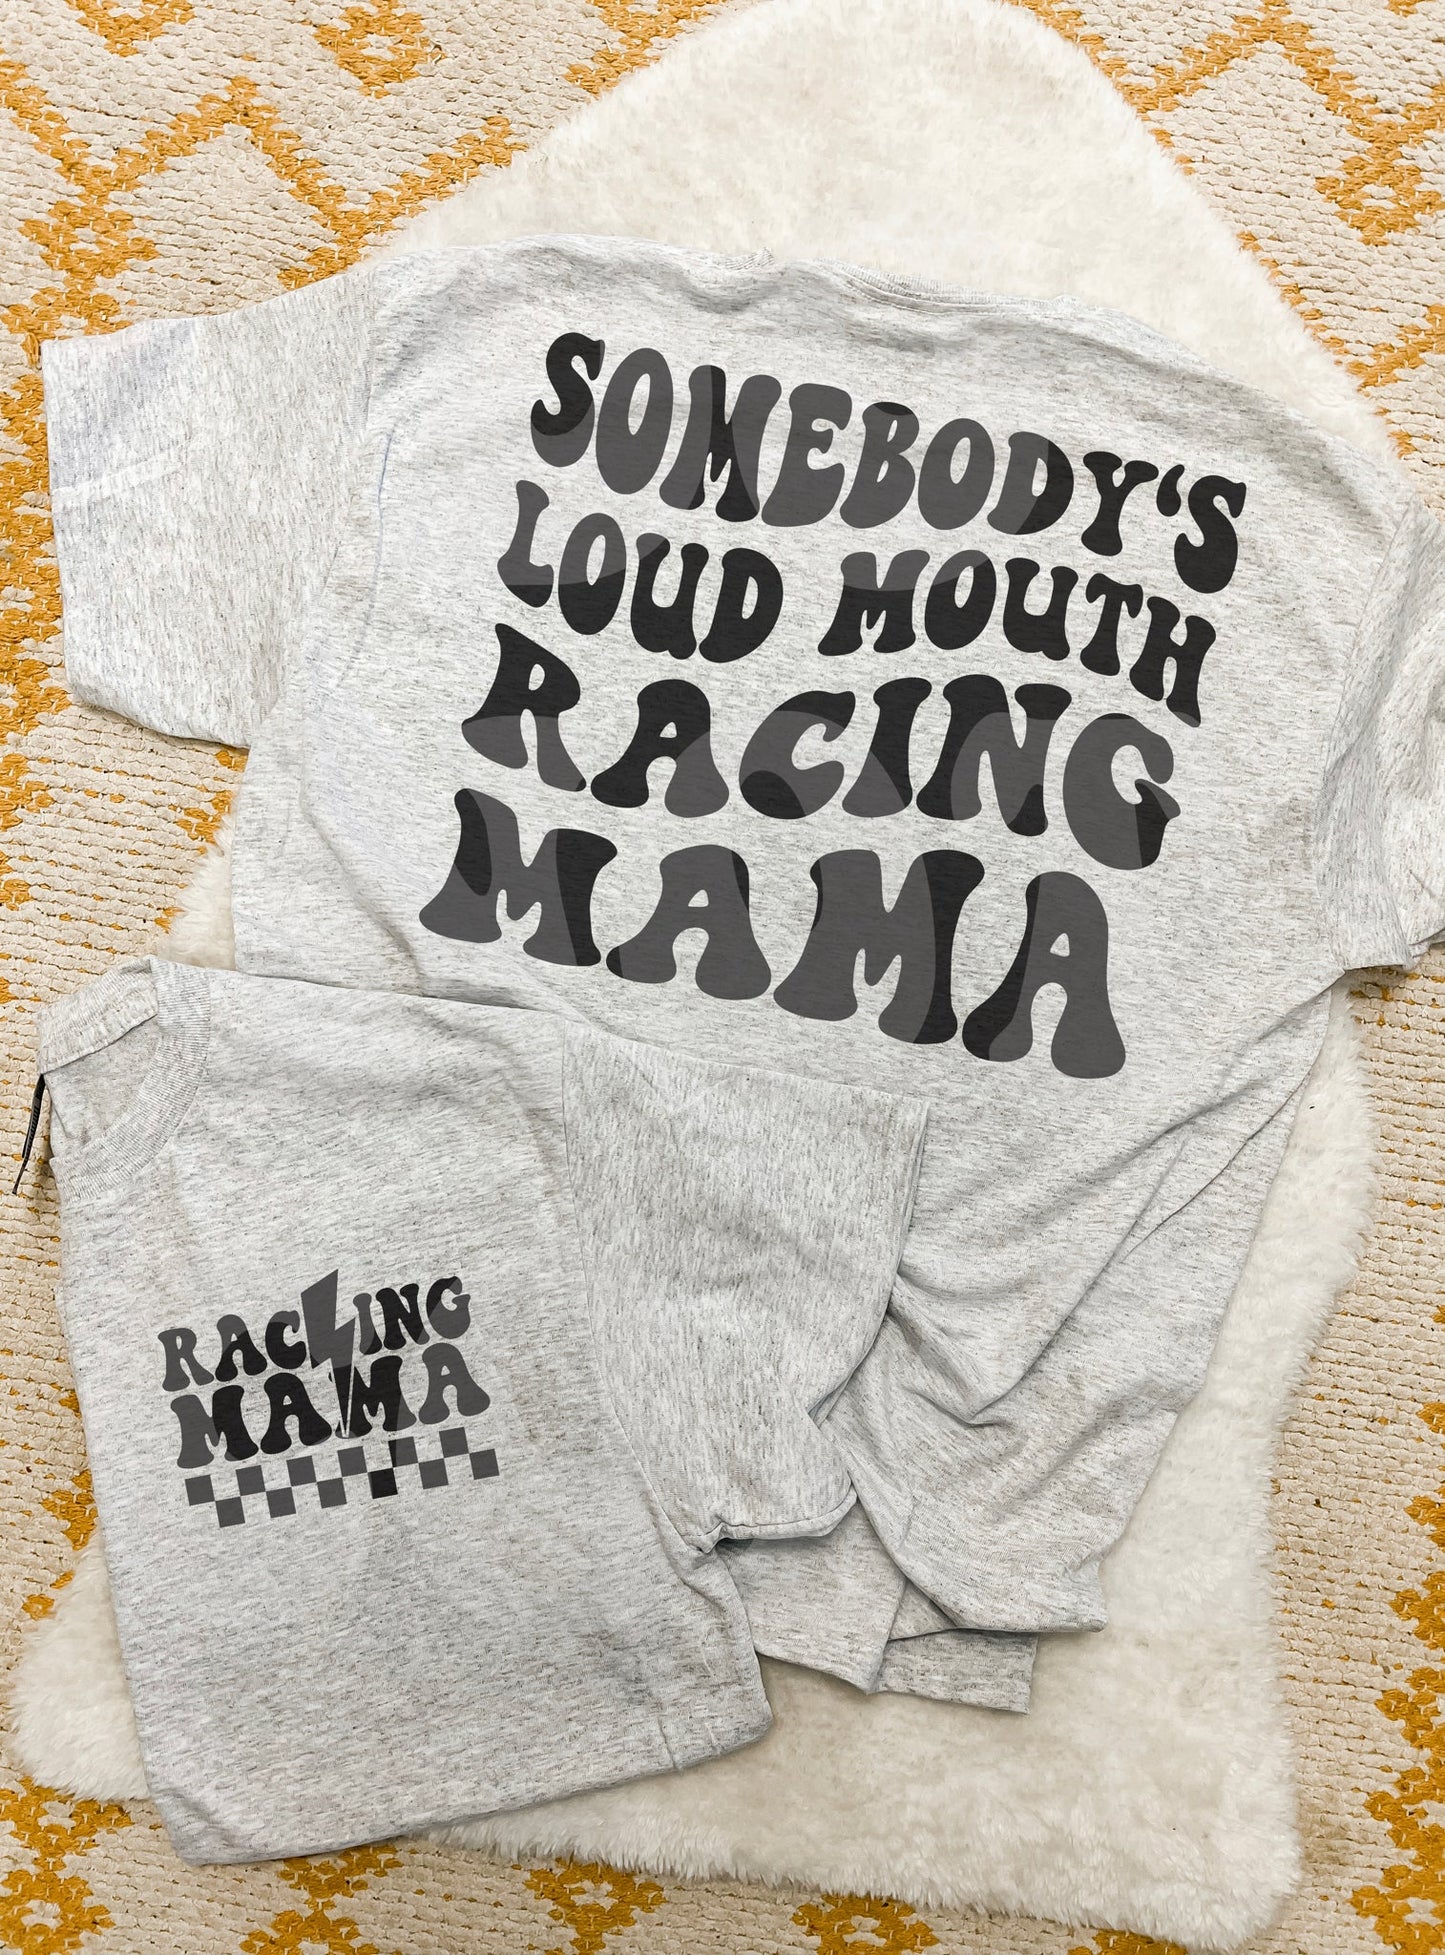 Loud Mouth Racing Mama ~ Sweatshirt•Tee